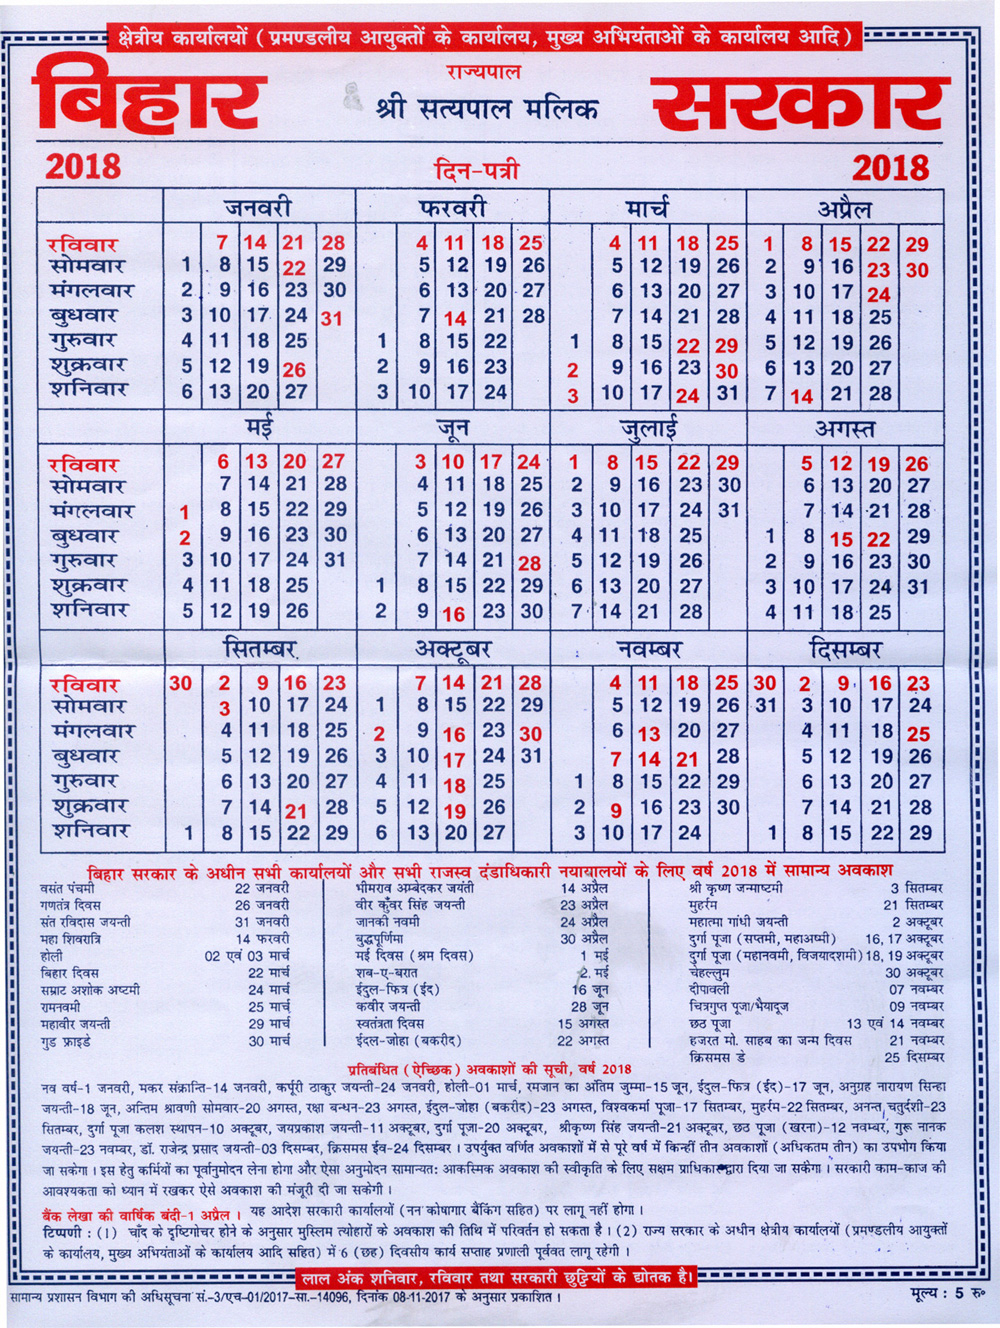 Bihar Govt. Calendar 2018, Bihar Govt. Holiday List, Holiday in Bihar Government Calendar